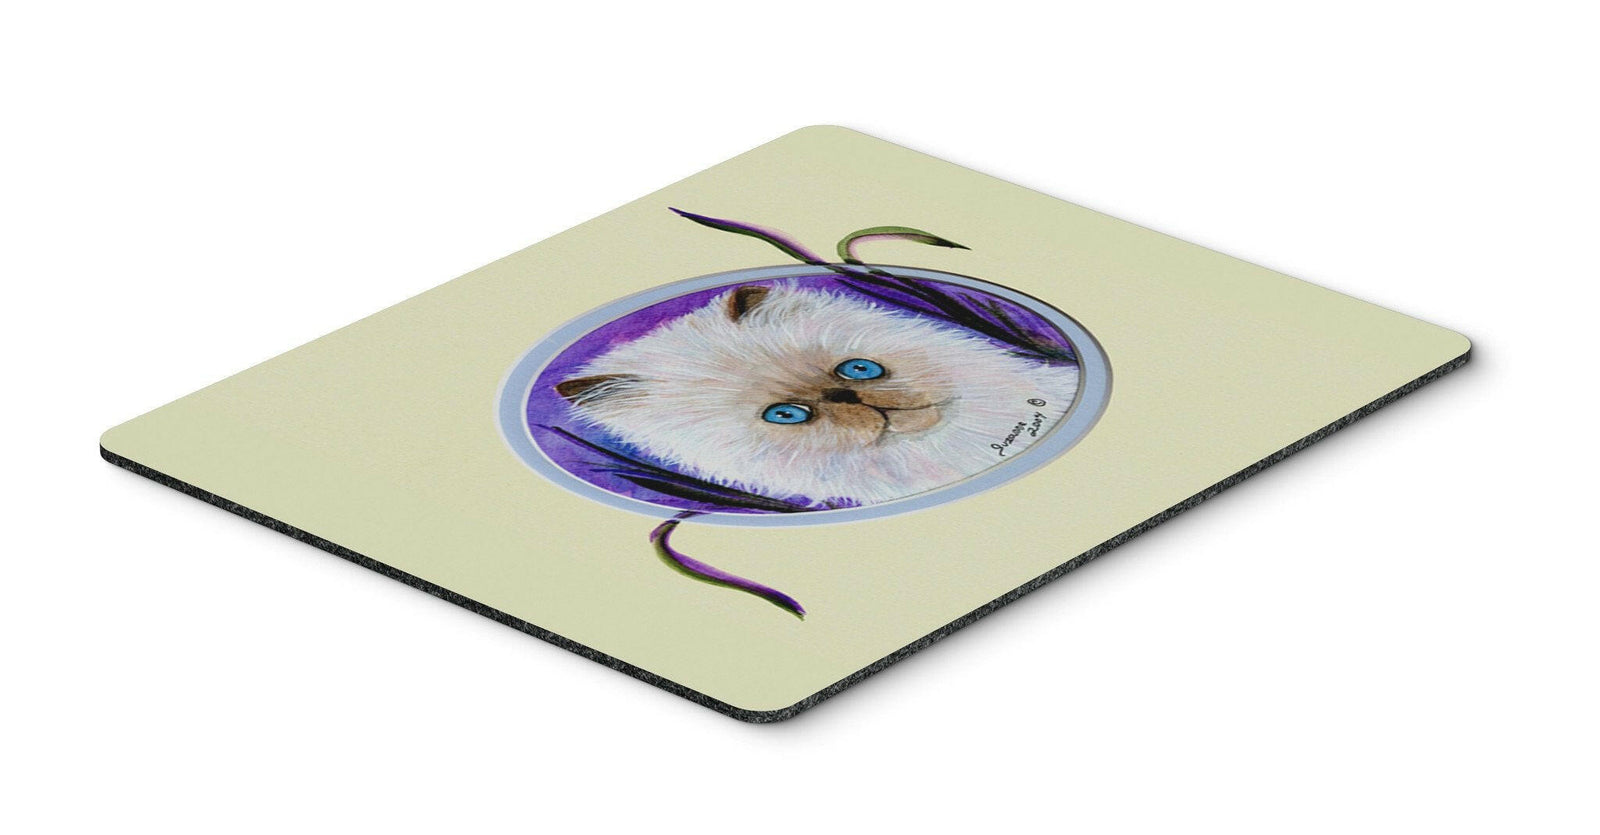 Cat Mouse pad, hot pad, or trivet by Caroline's Treasures